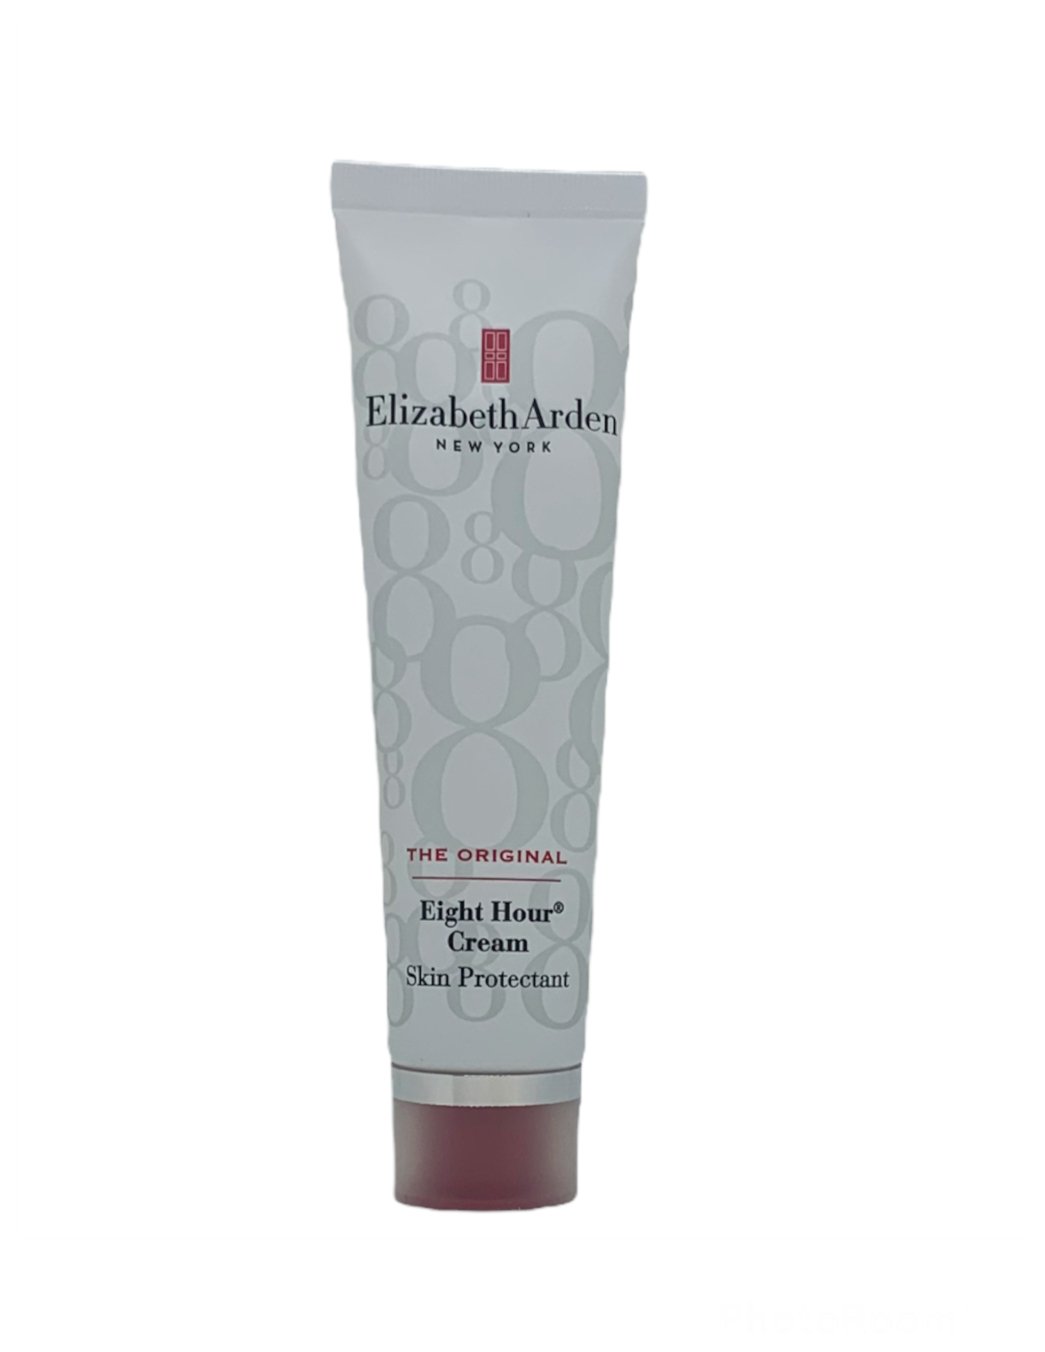 Elizabeth Arden 8 Hour Skin Protectant Body Cream - 50ml